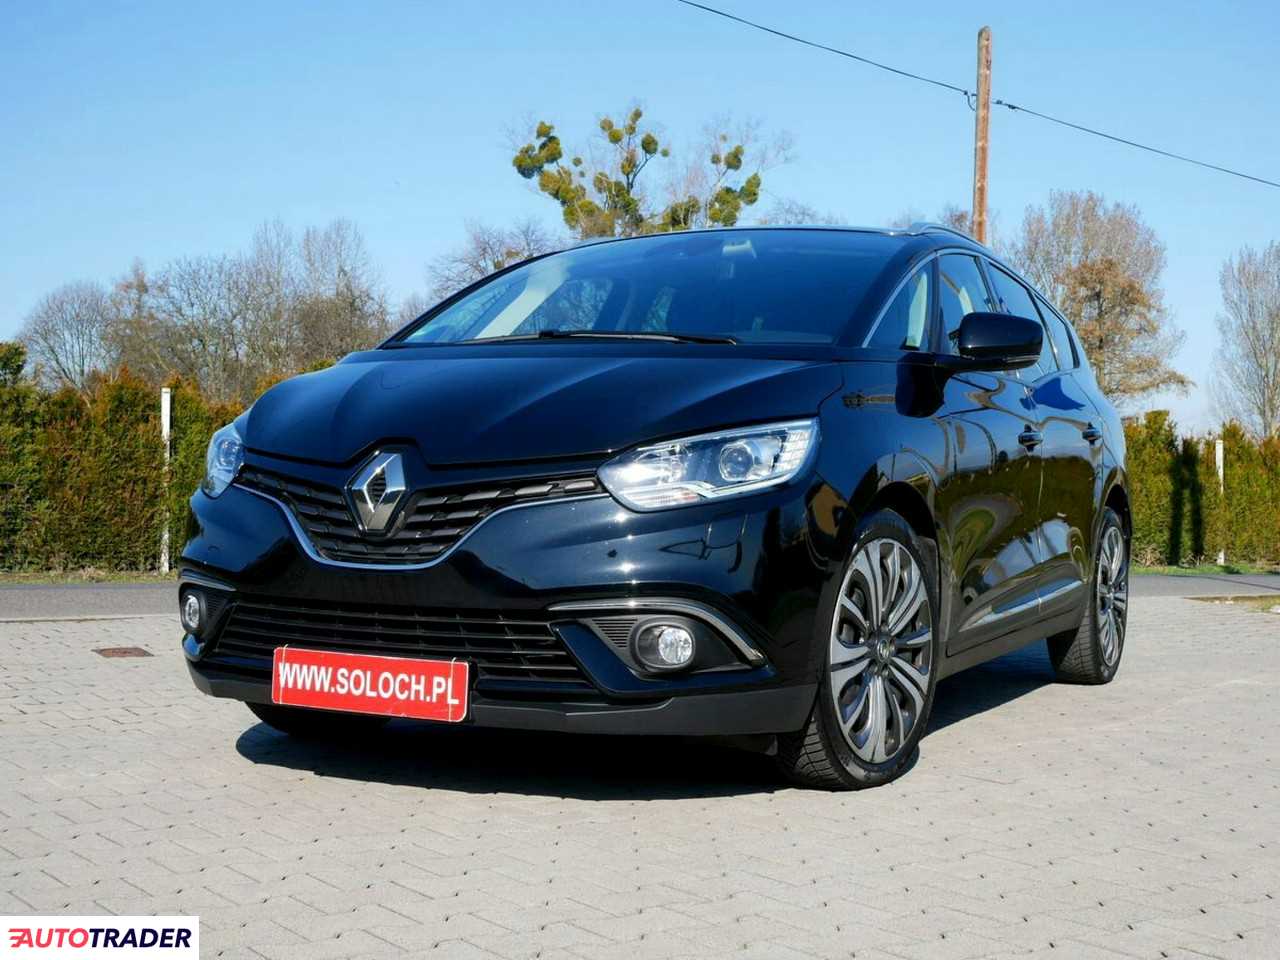 Renault Scenic 2017 1.5 110 KM